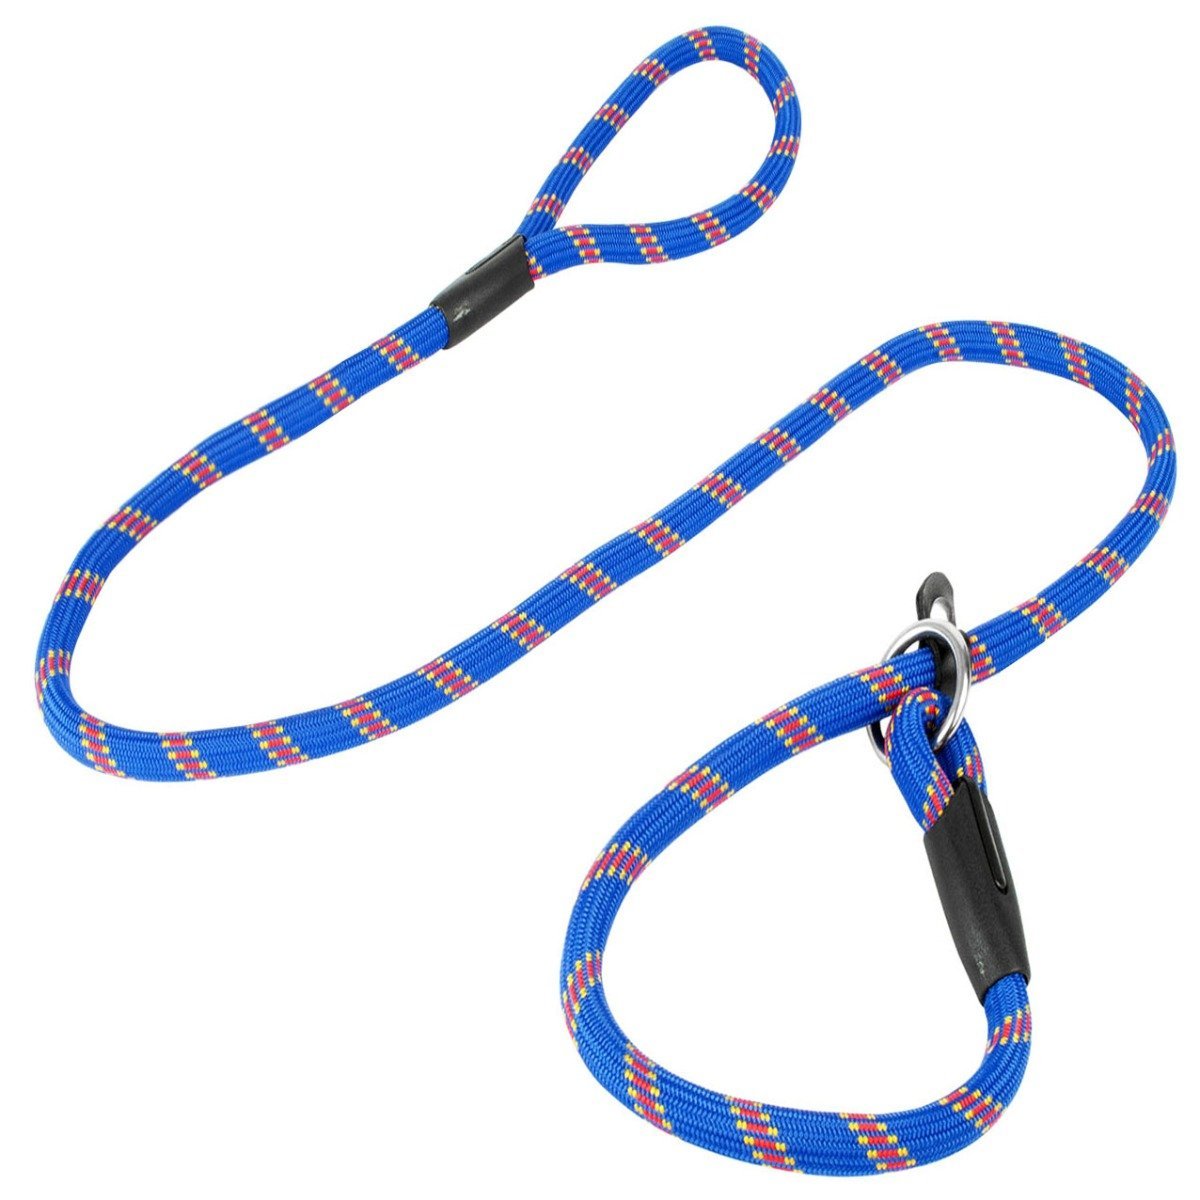 Adjustable Dog Lead - 1.5m Blue - Inspirely